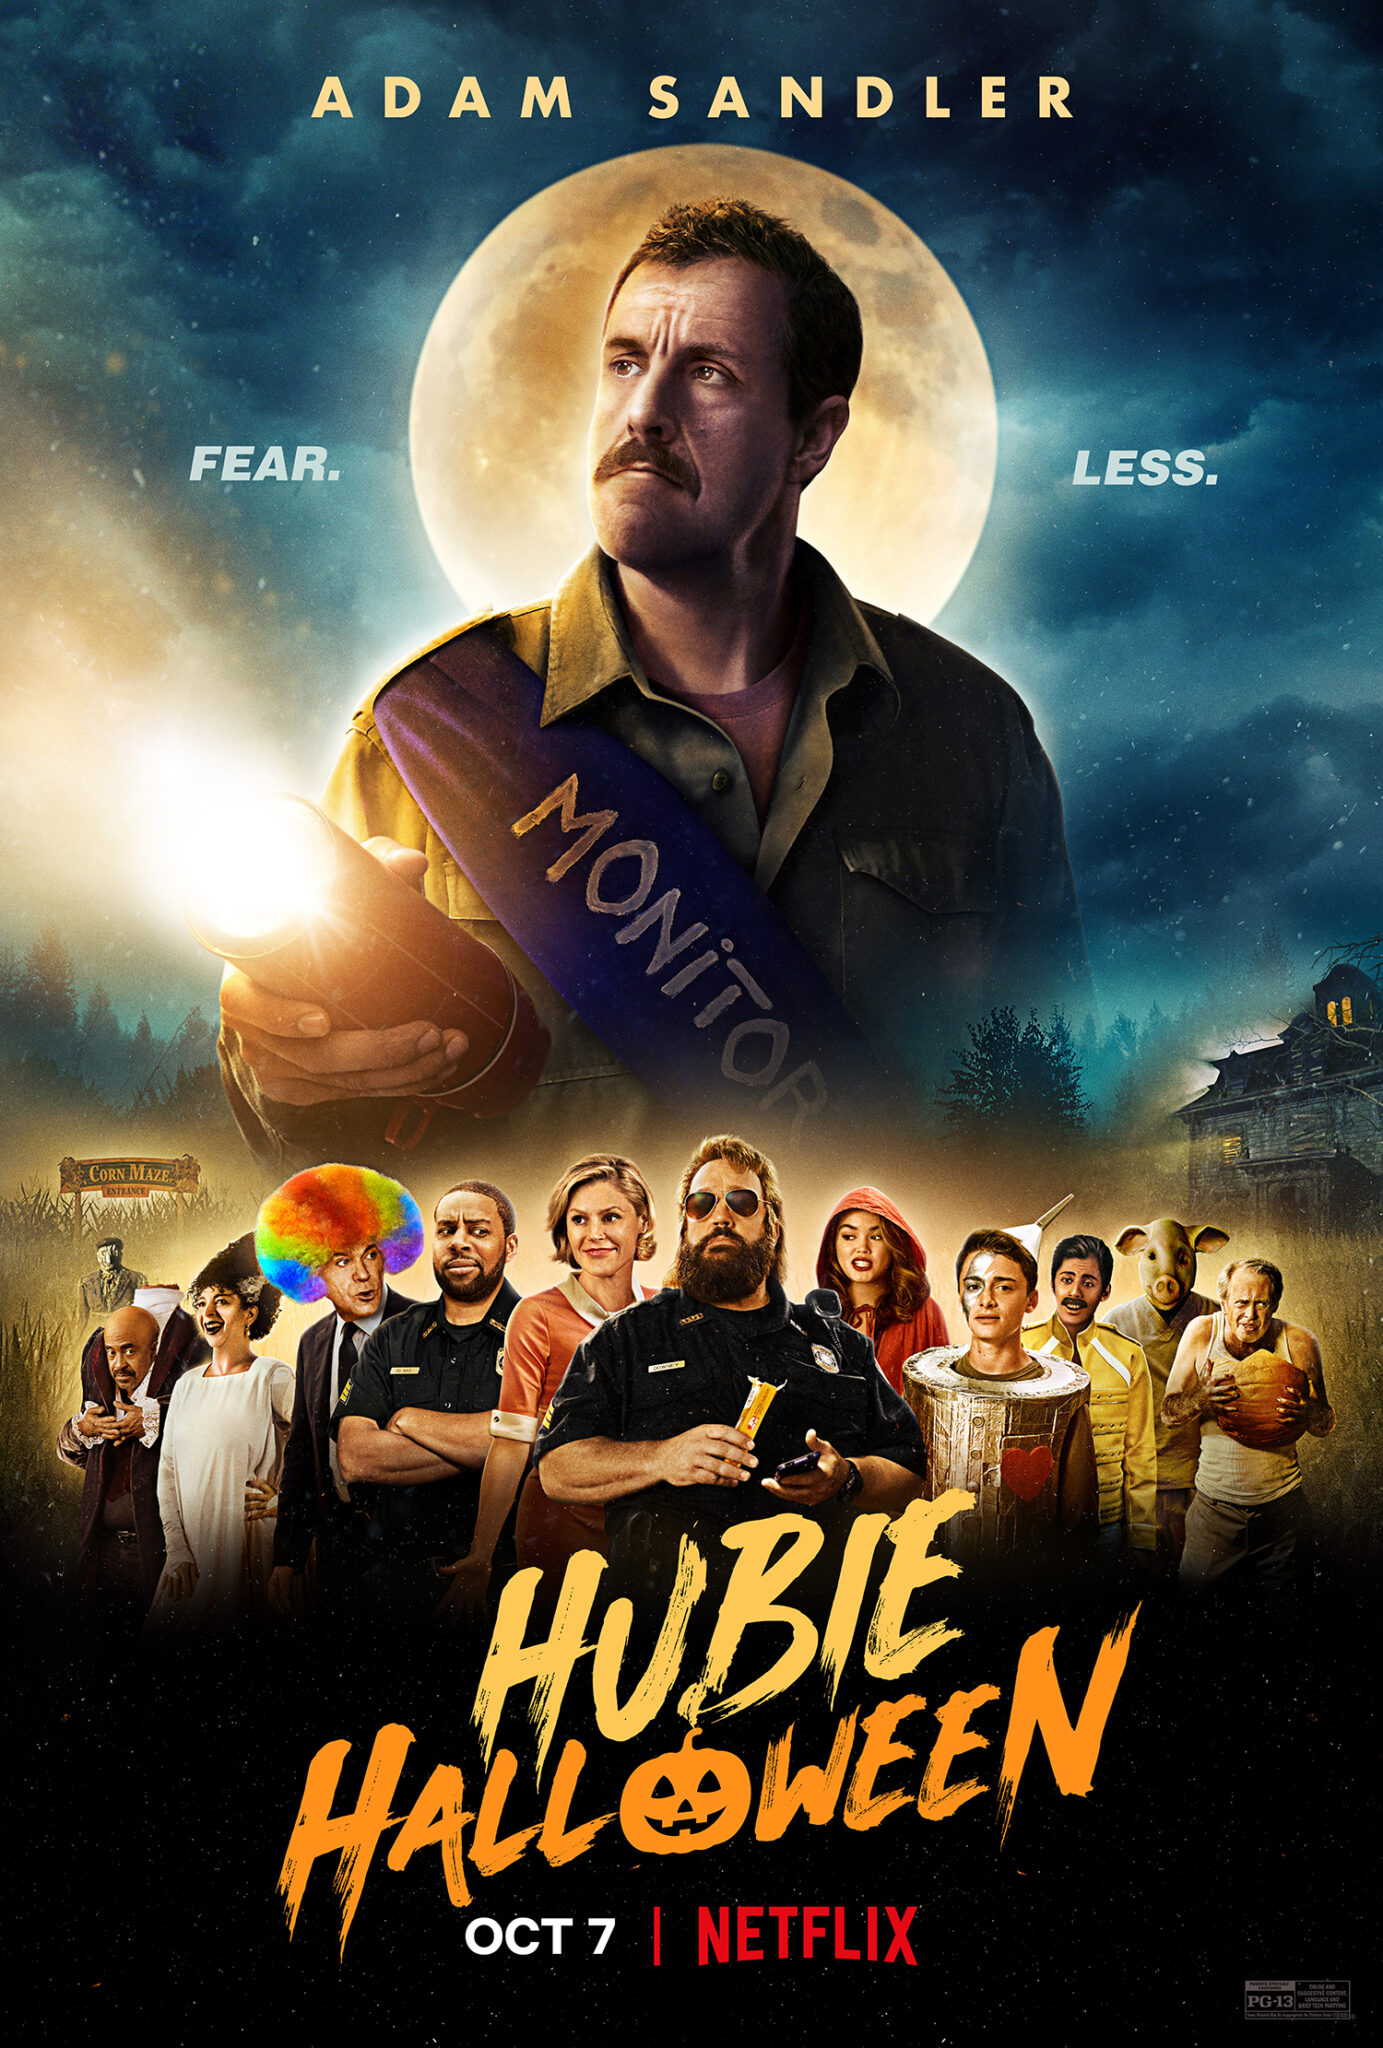 Get Ready for Hubie Halloween with Adam Sandler on Oct 7th! (Netflix) #HubieHalloween